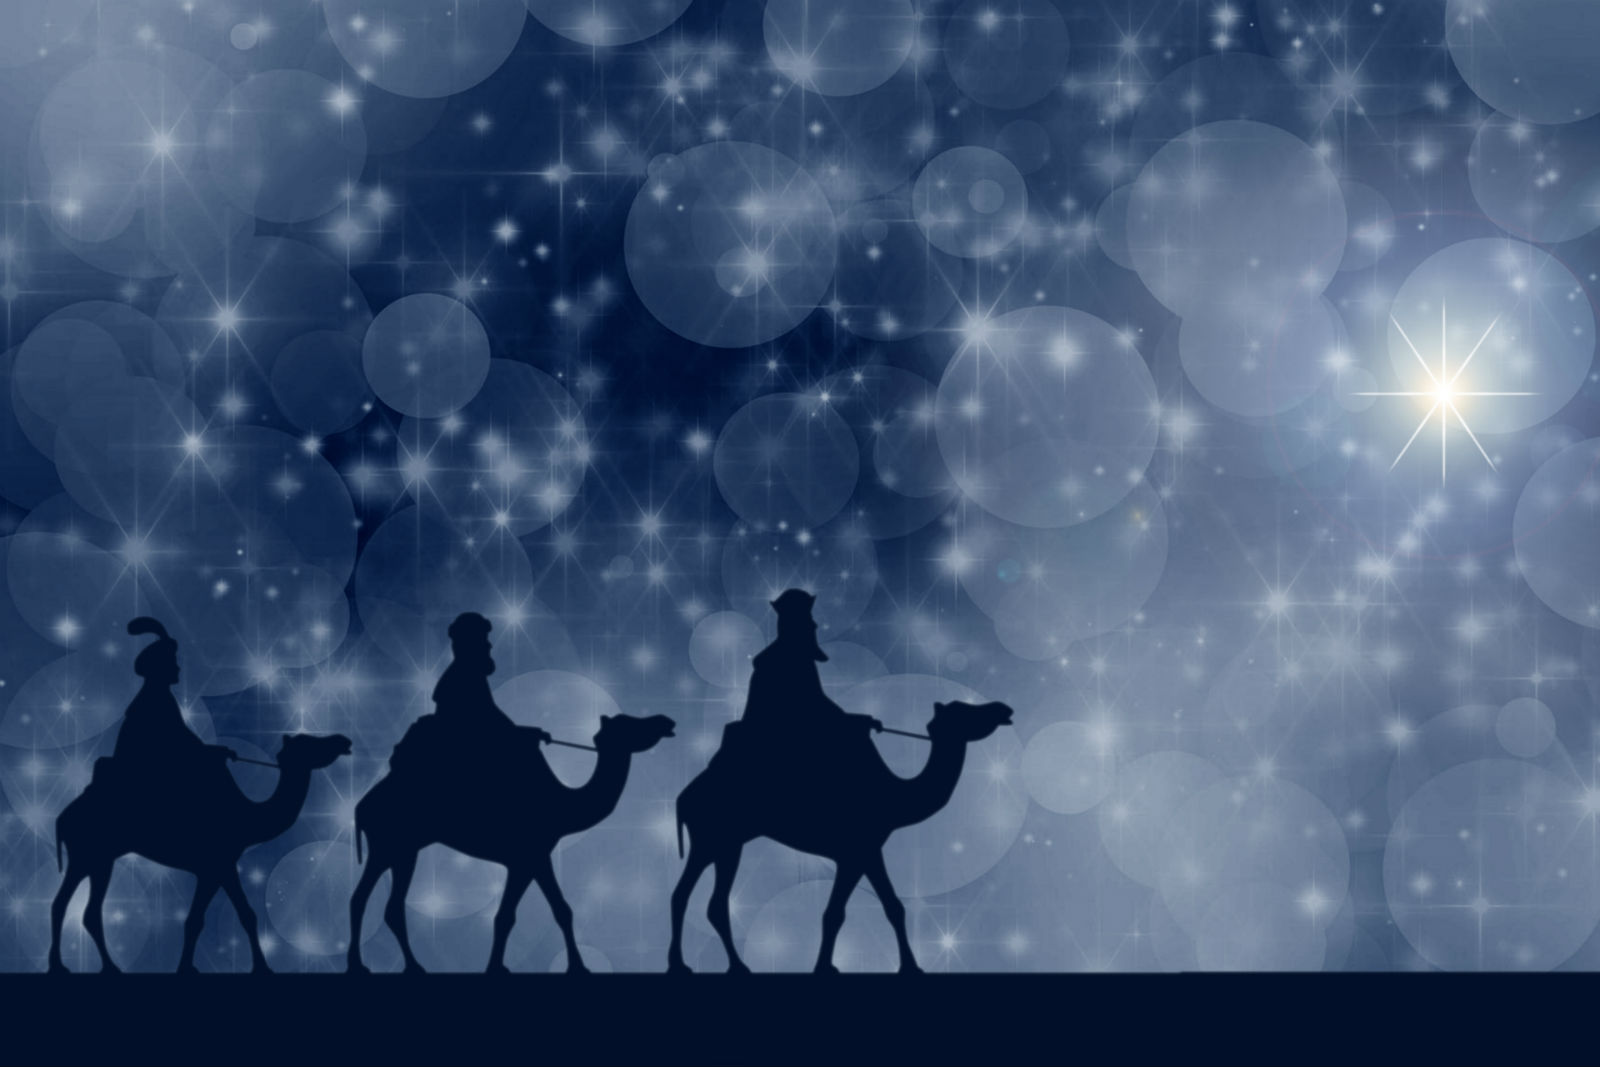 Three Magi on camels following the Bethlehem star